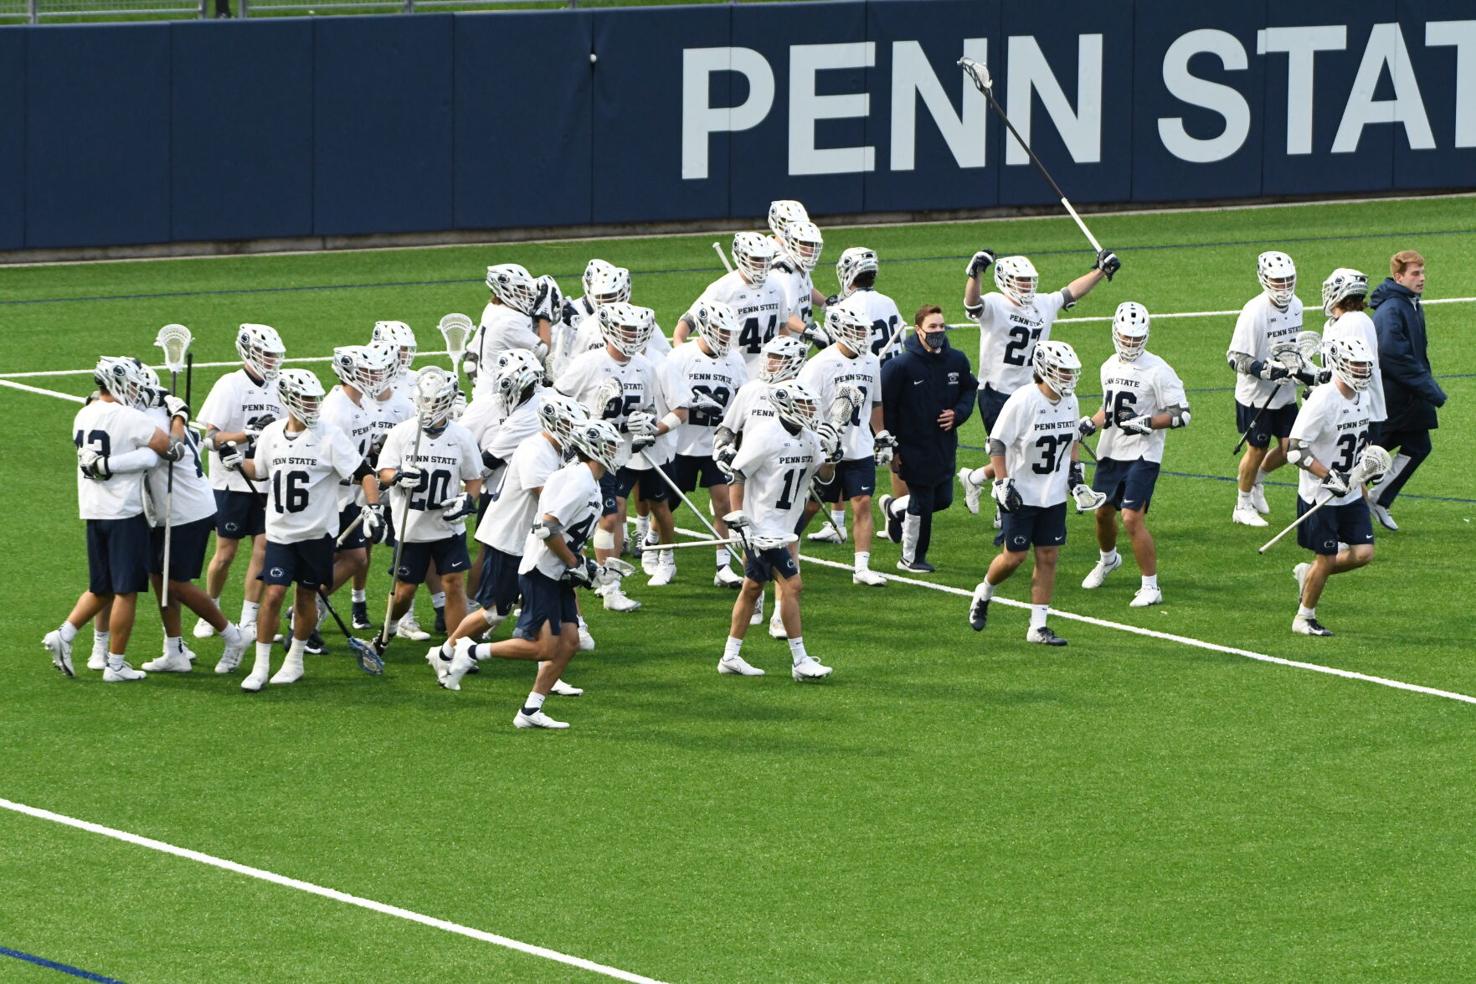 Penn State men's lacrosse goalie Aleric Fyock named Big Ten Co